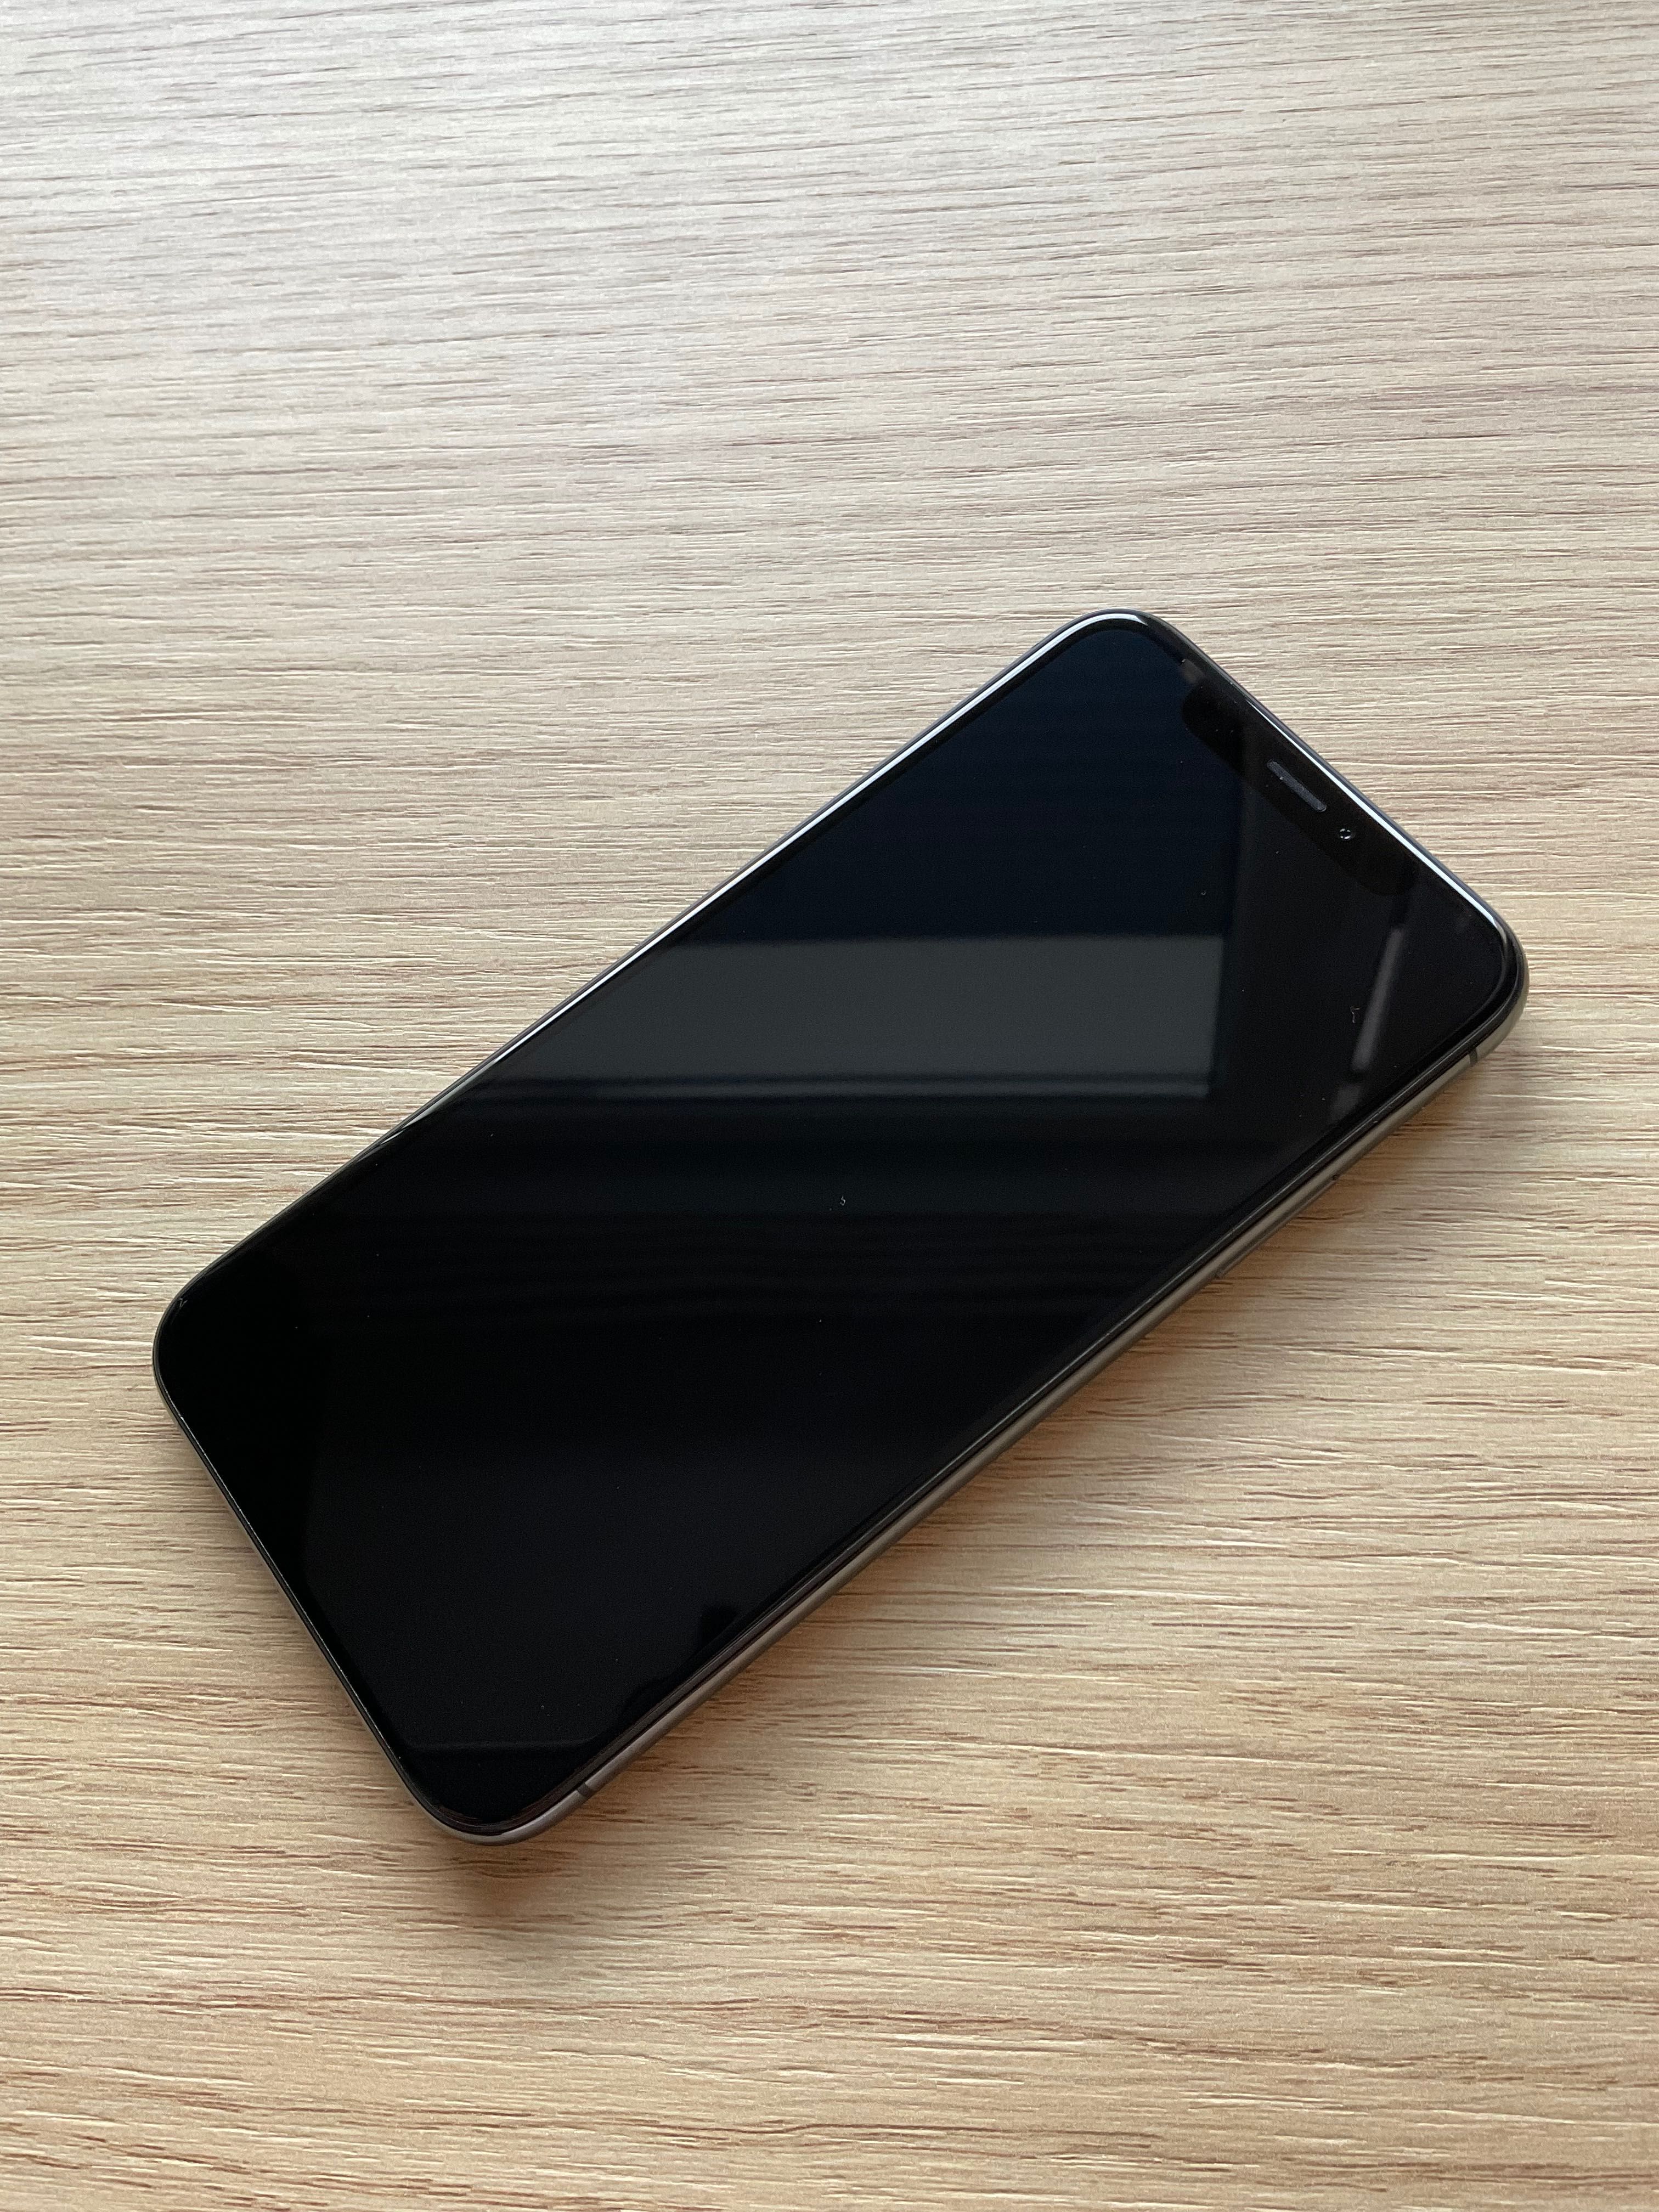 Apple iPhone XS 64gb space gray